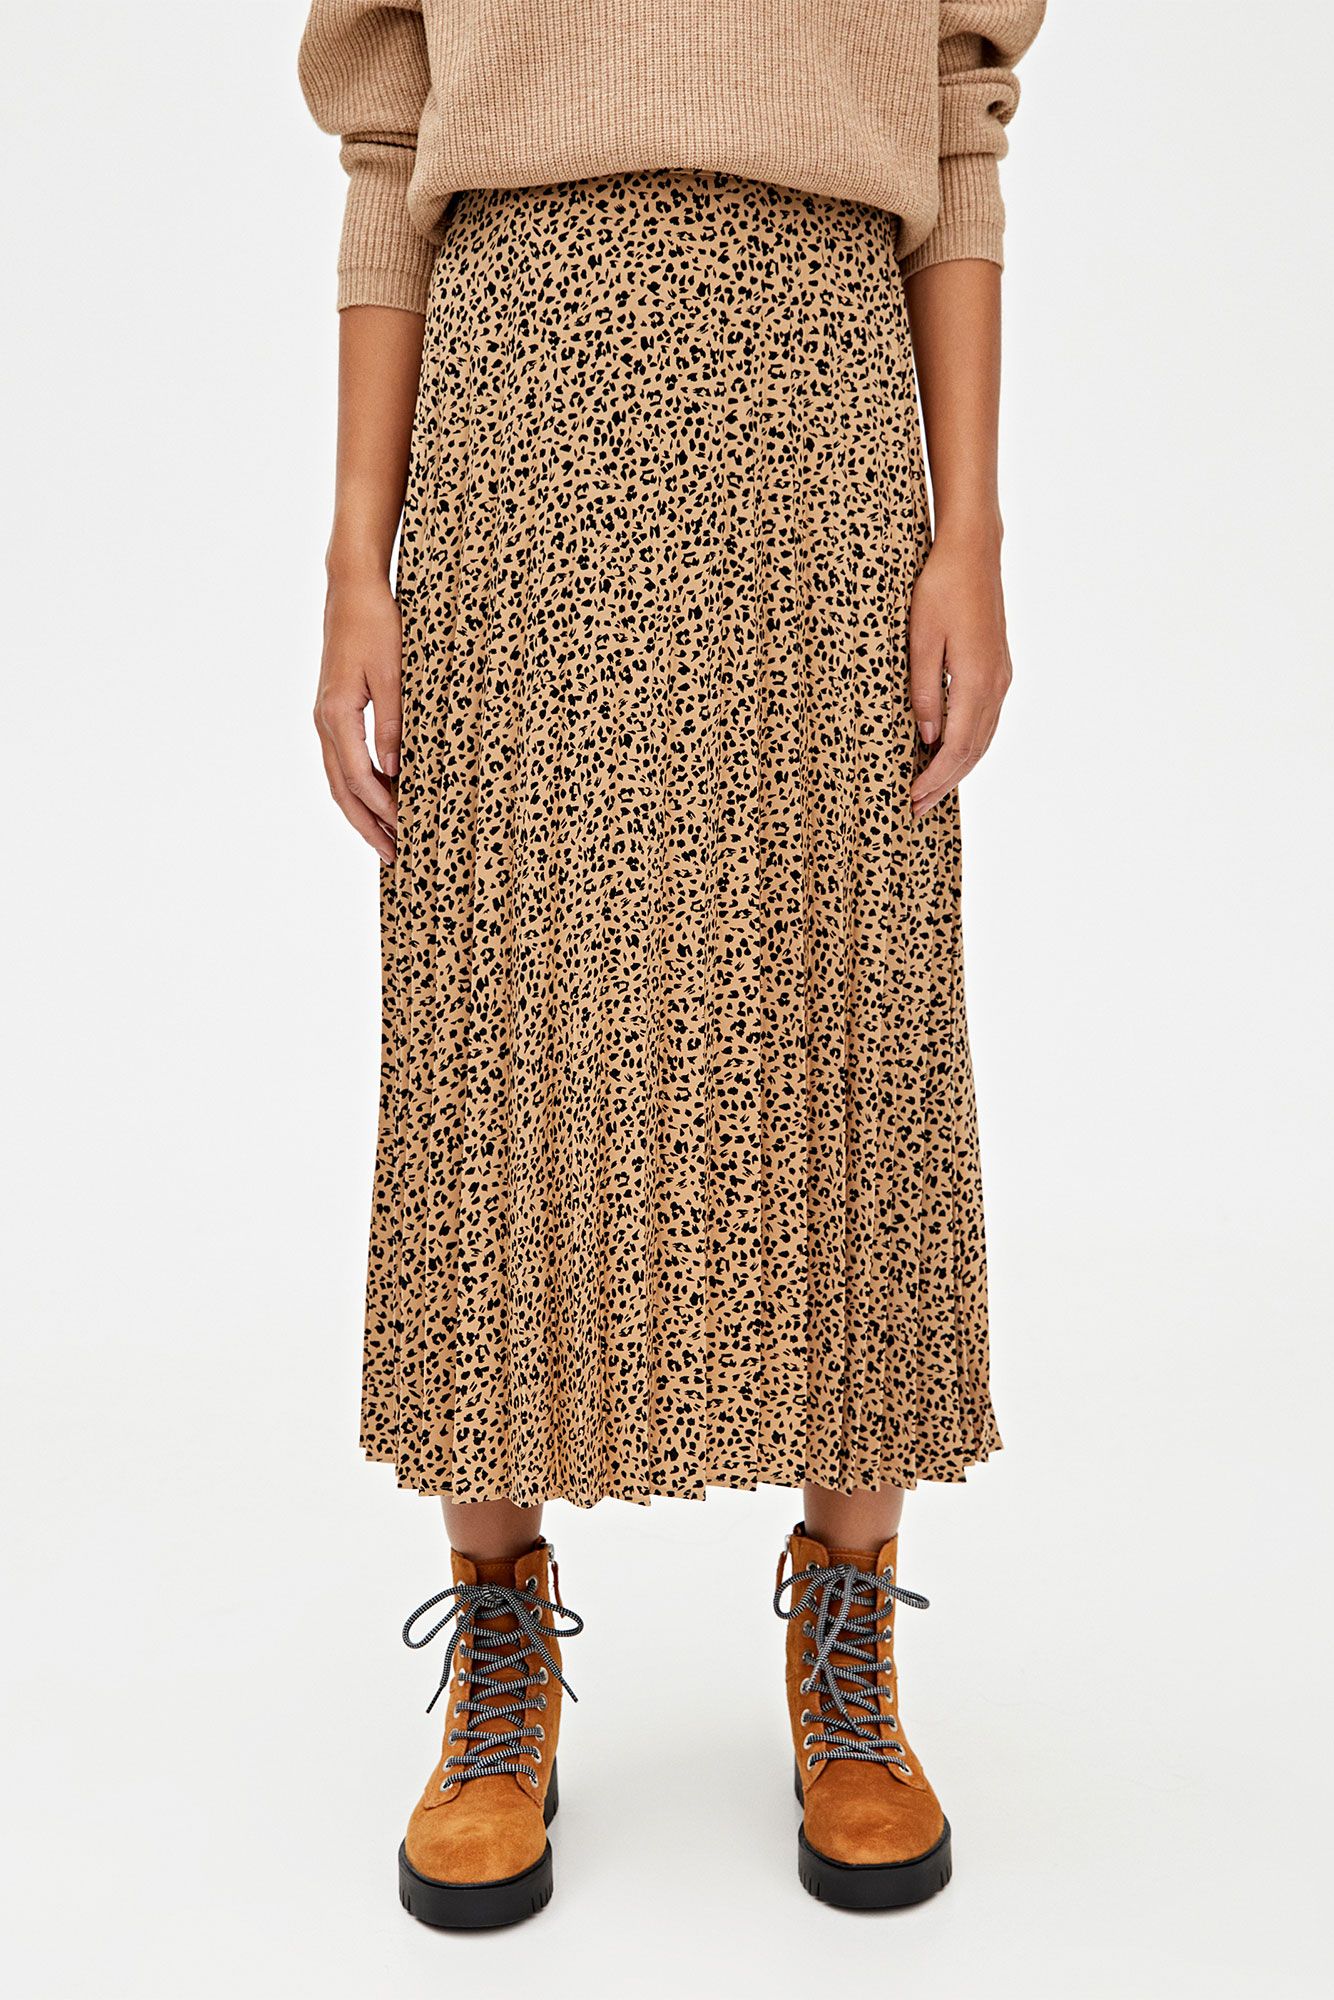 La falda larga de leopardo de Pull&Bear que botas